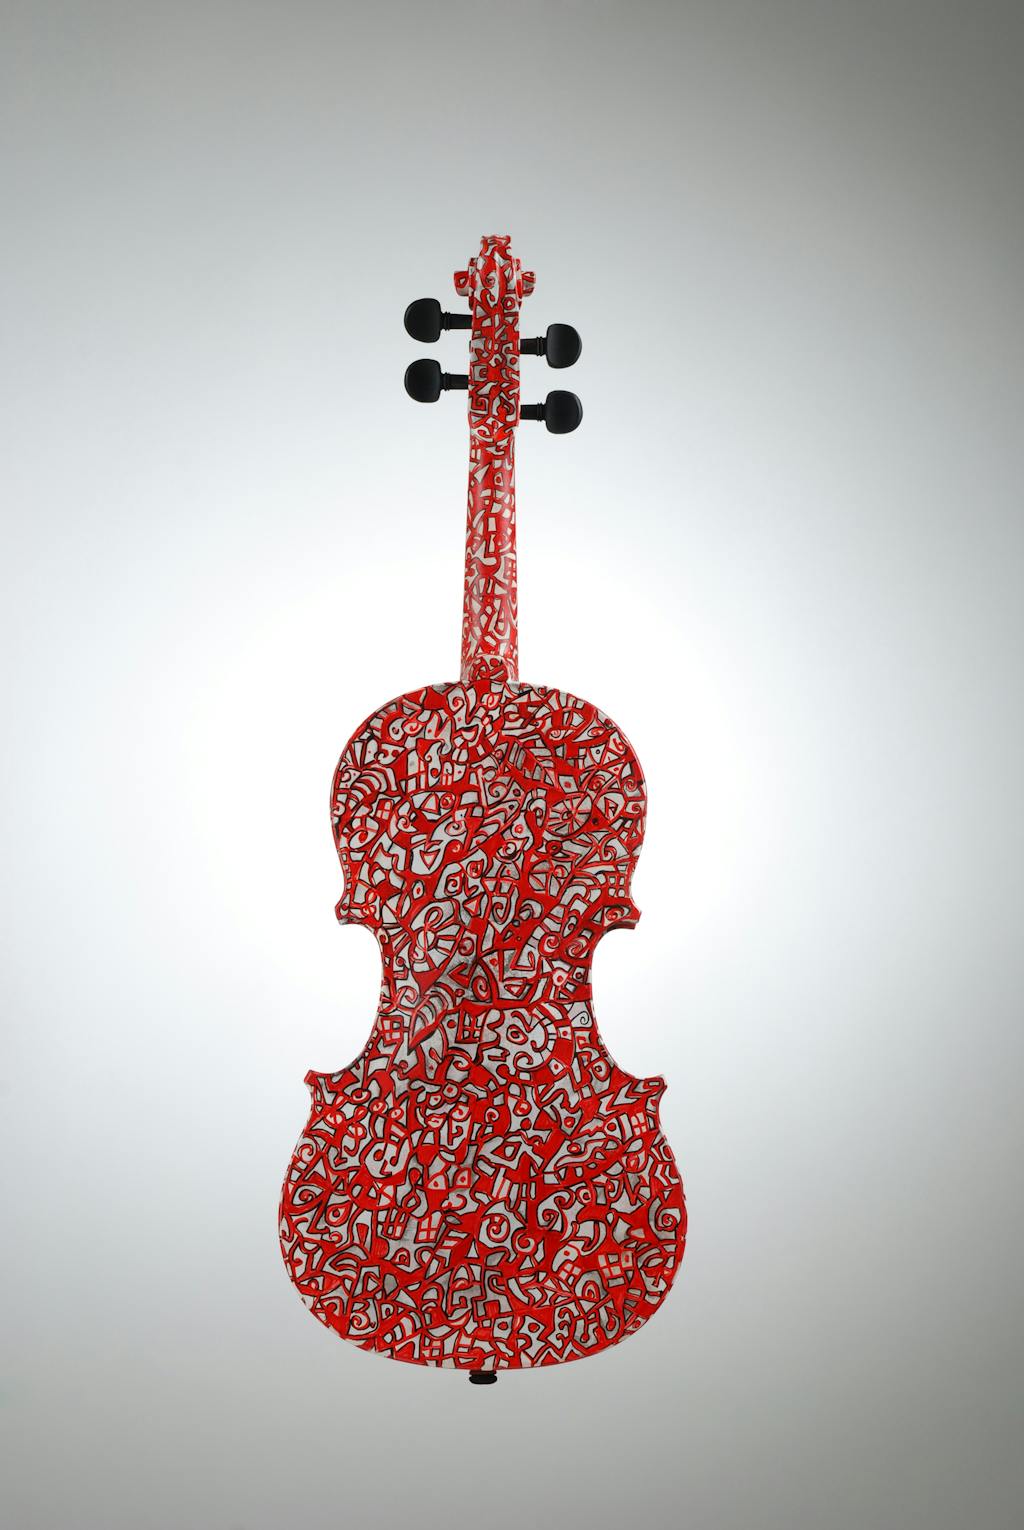 Violin "Mozartiane", painted by Elena Birkenwald in 2000